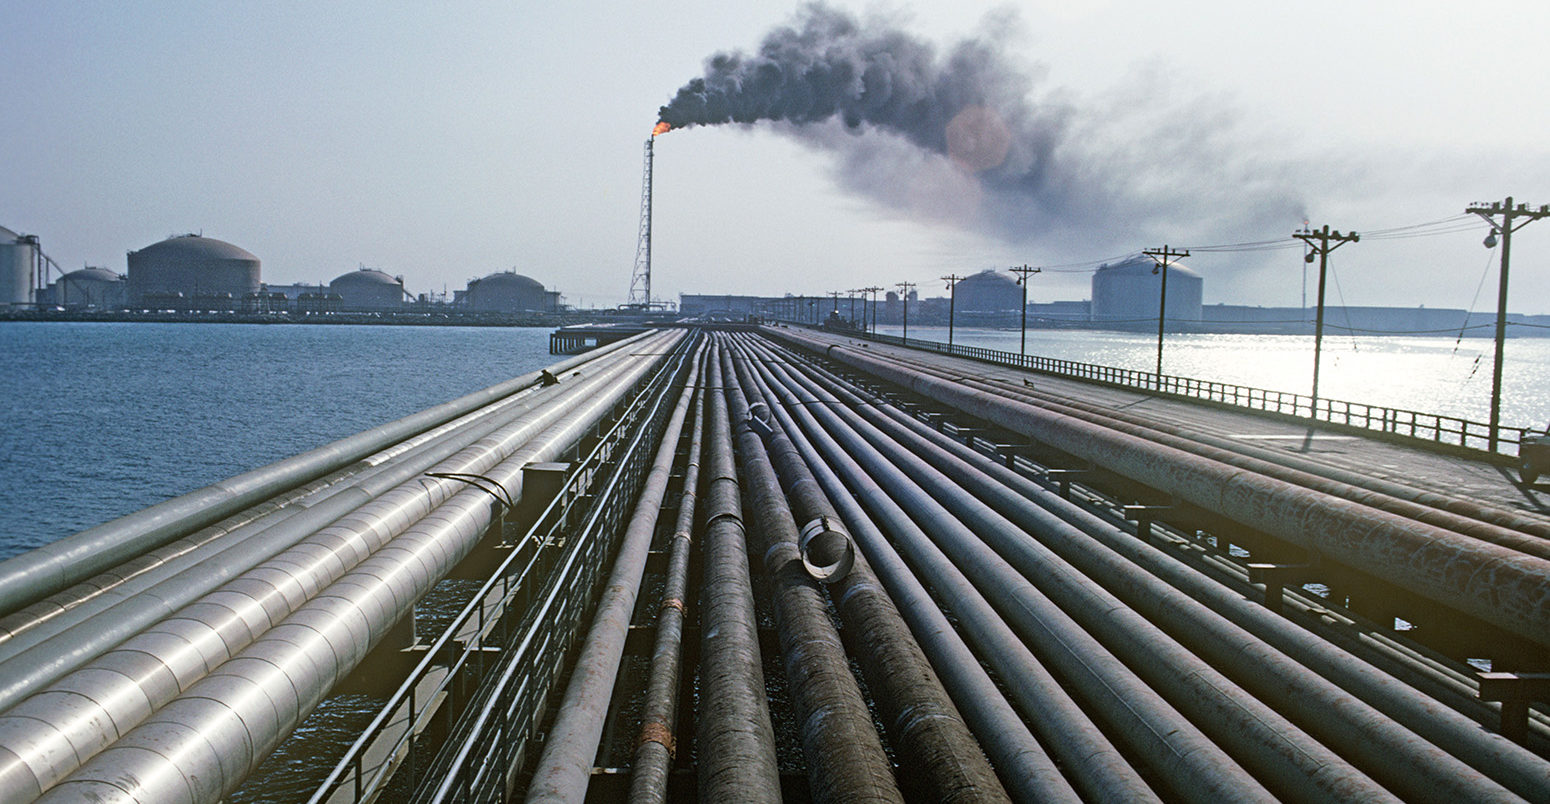 Ras Tanura oil refinery, Saudi Arabia. Credit: Tom Hanley / Alamy Stock Photo. A9EG3T